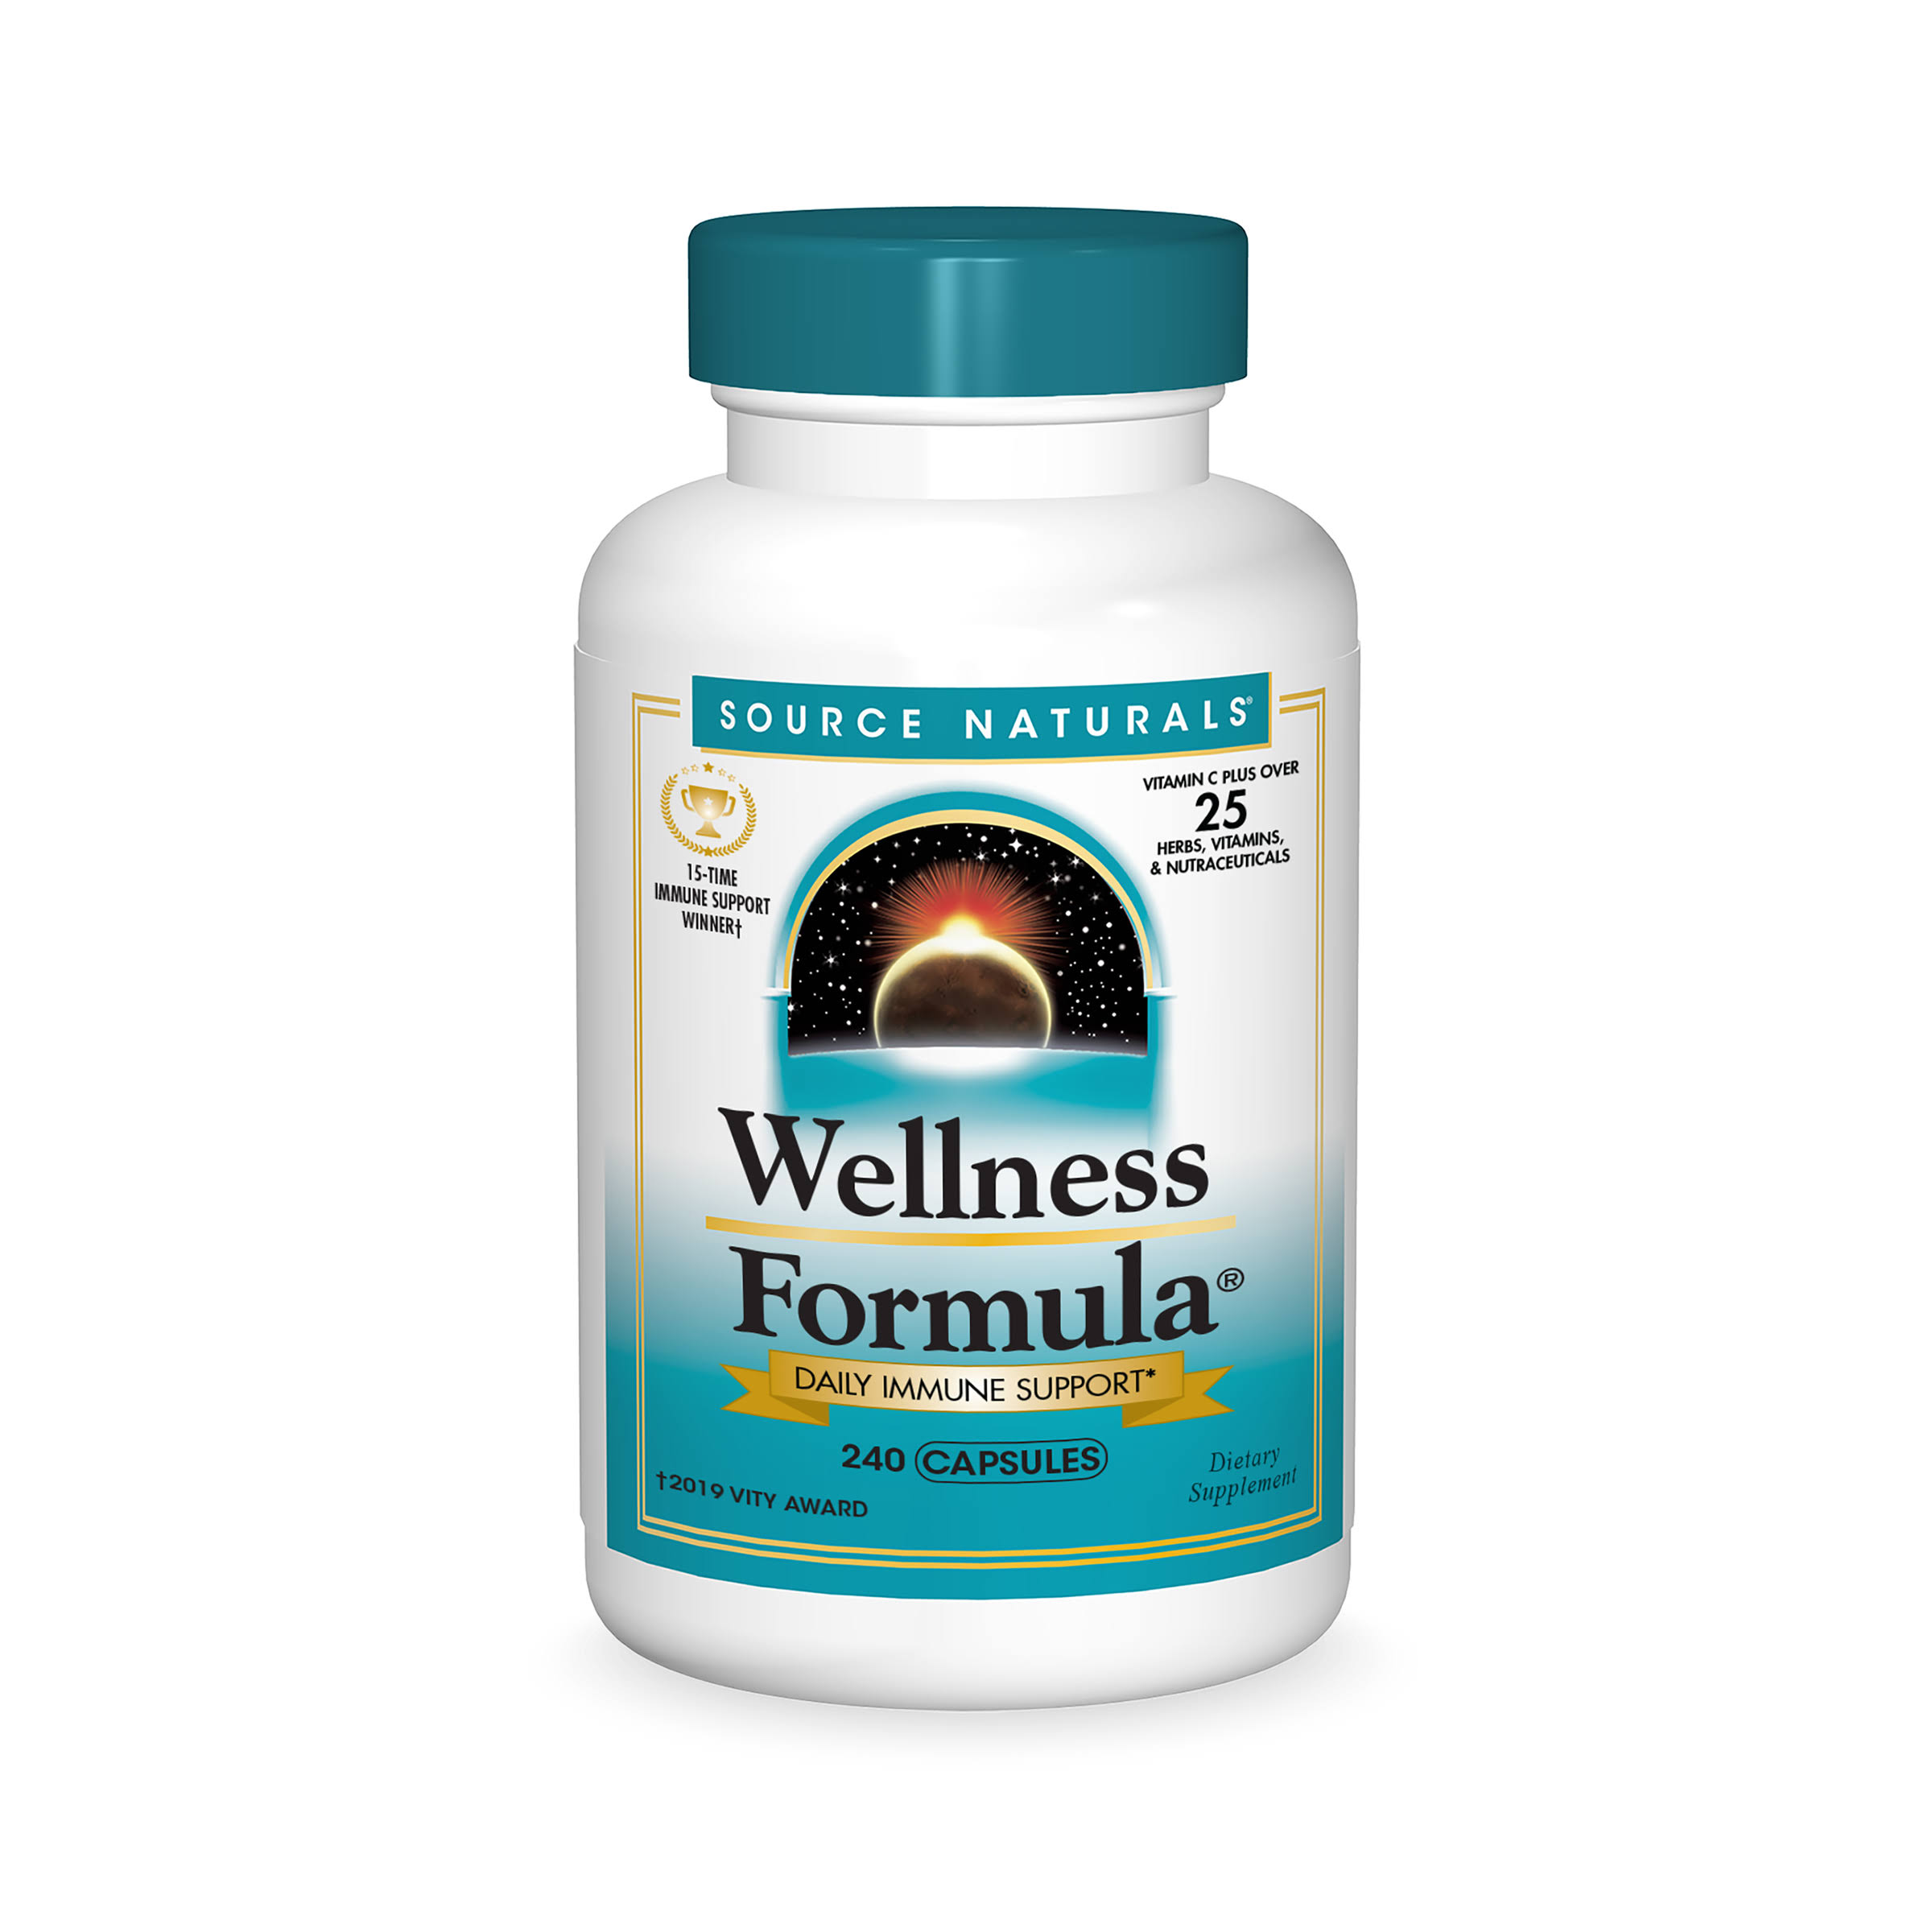 Source Naturals Wellness Formula - 240 Capsules